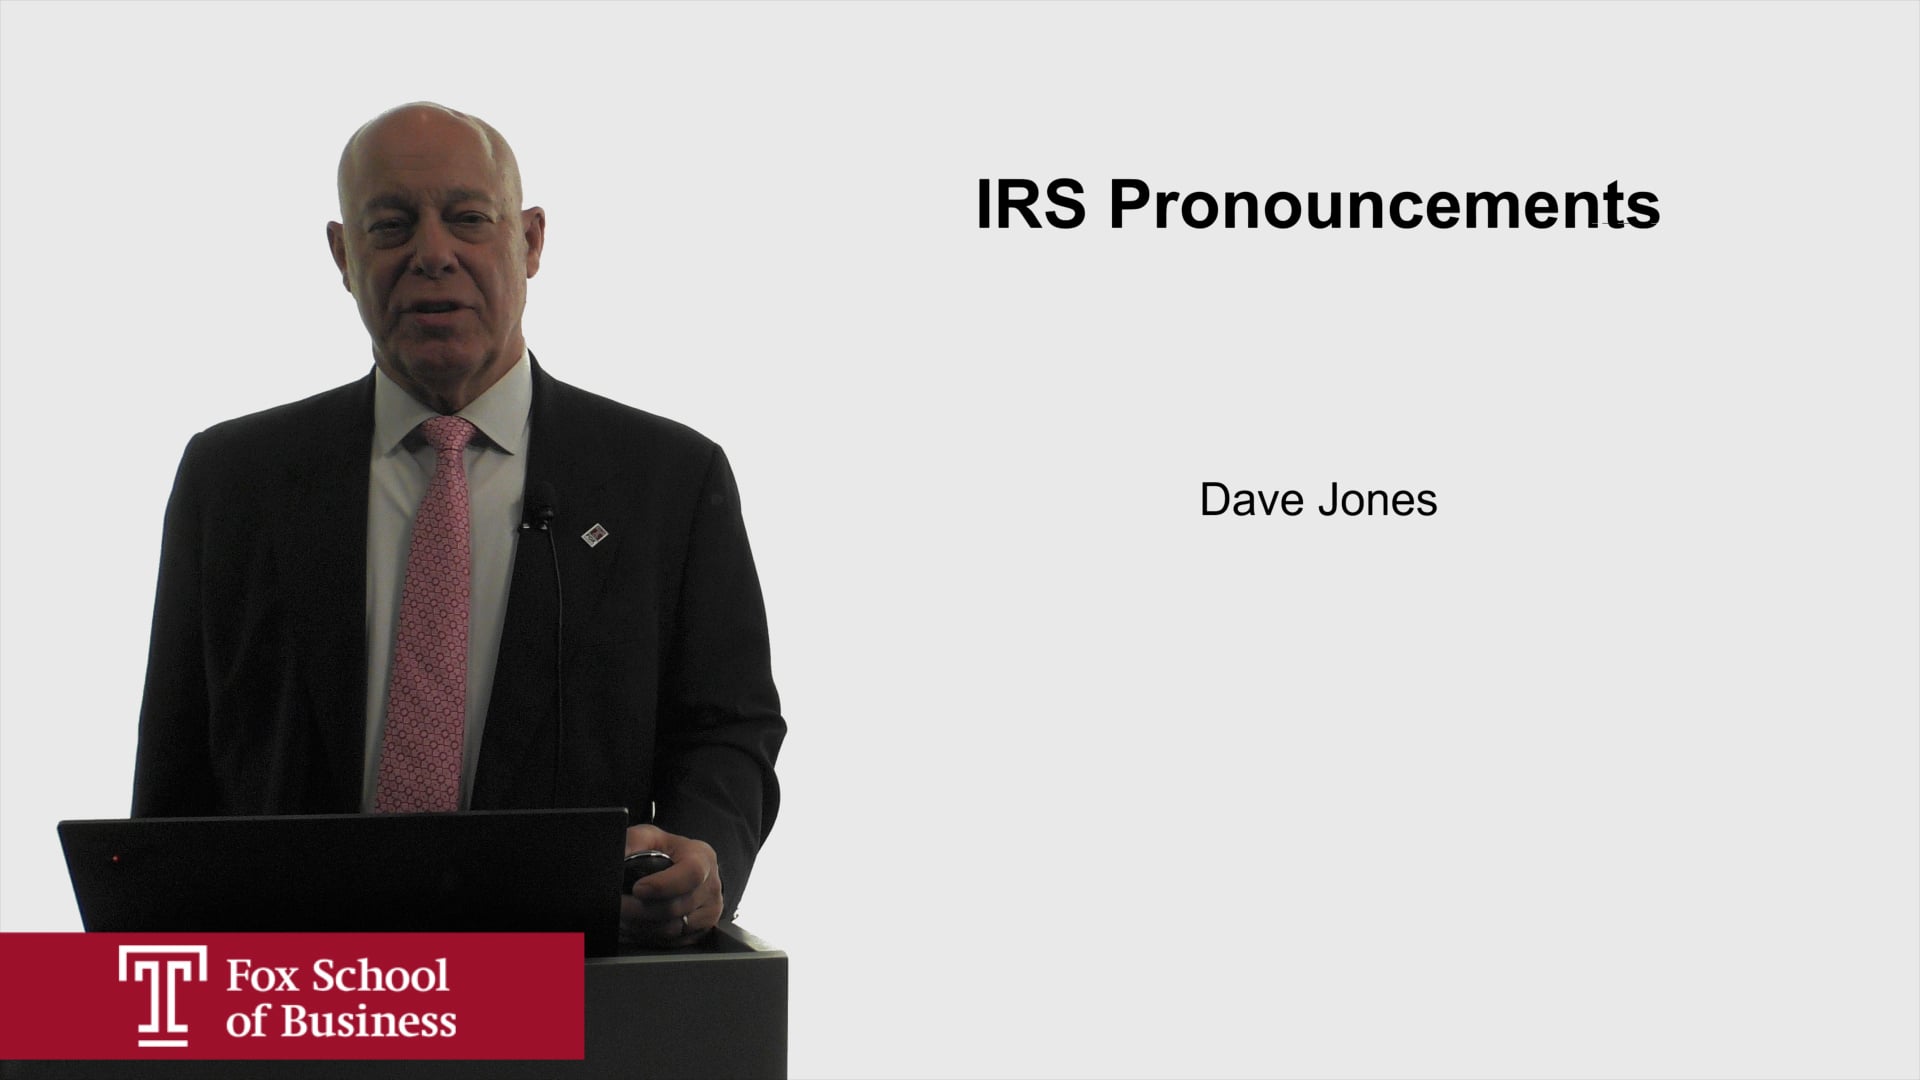 IRS Pronouncements